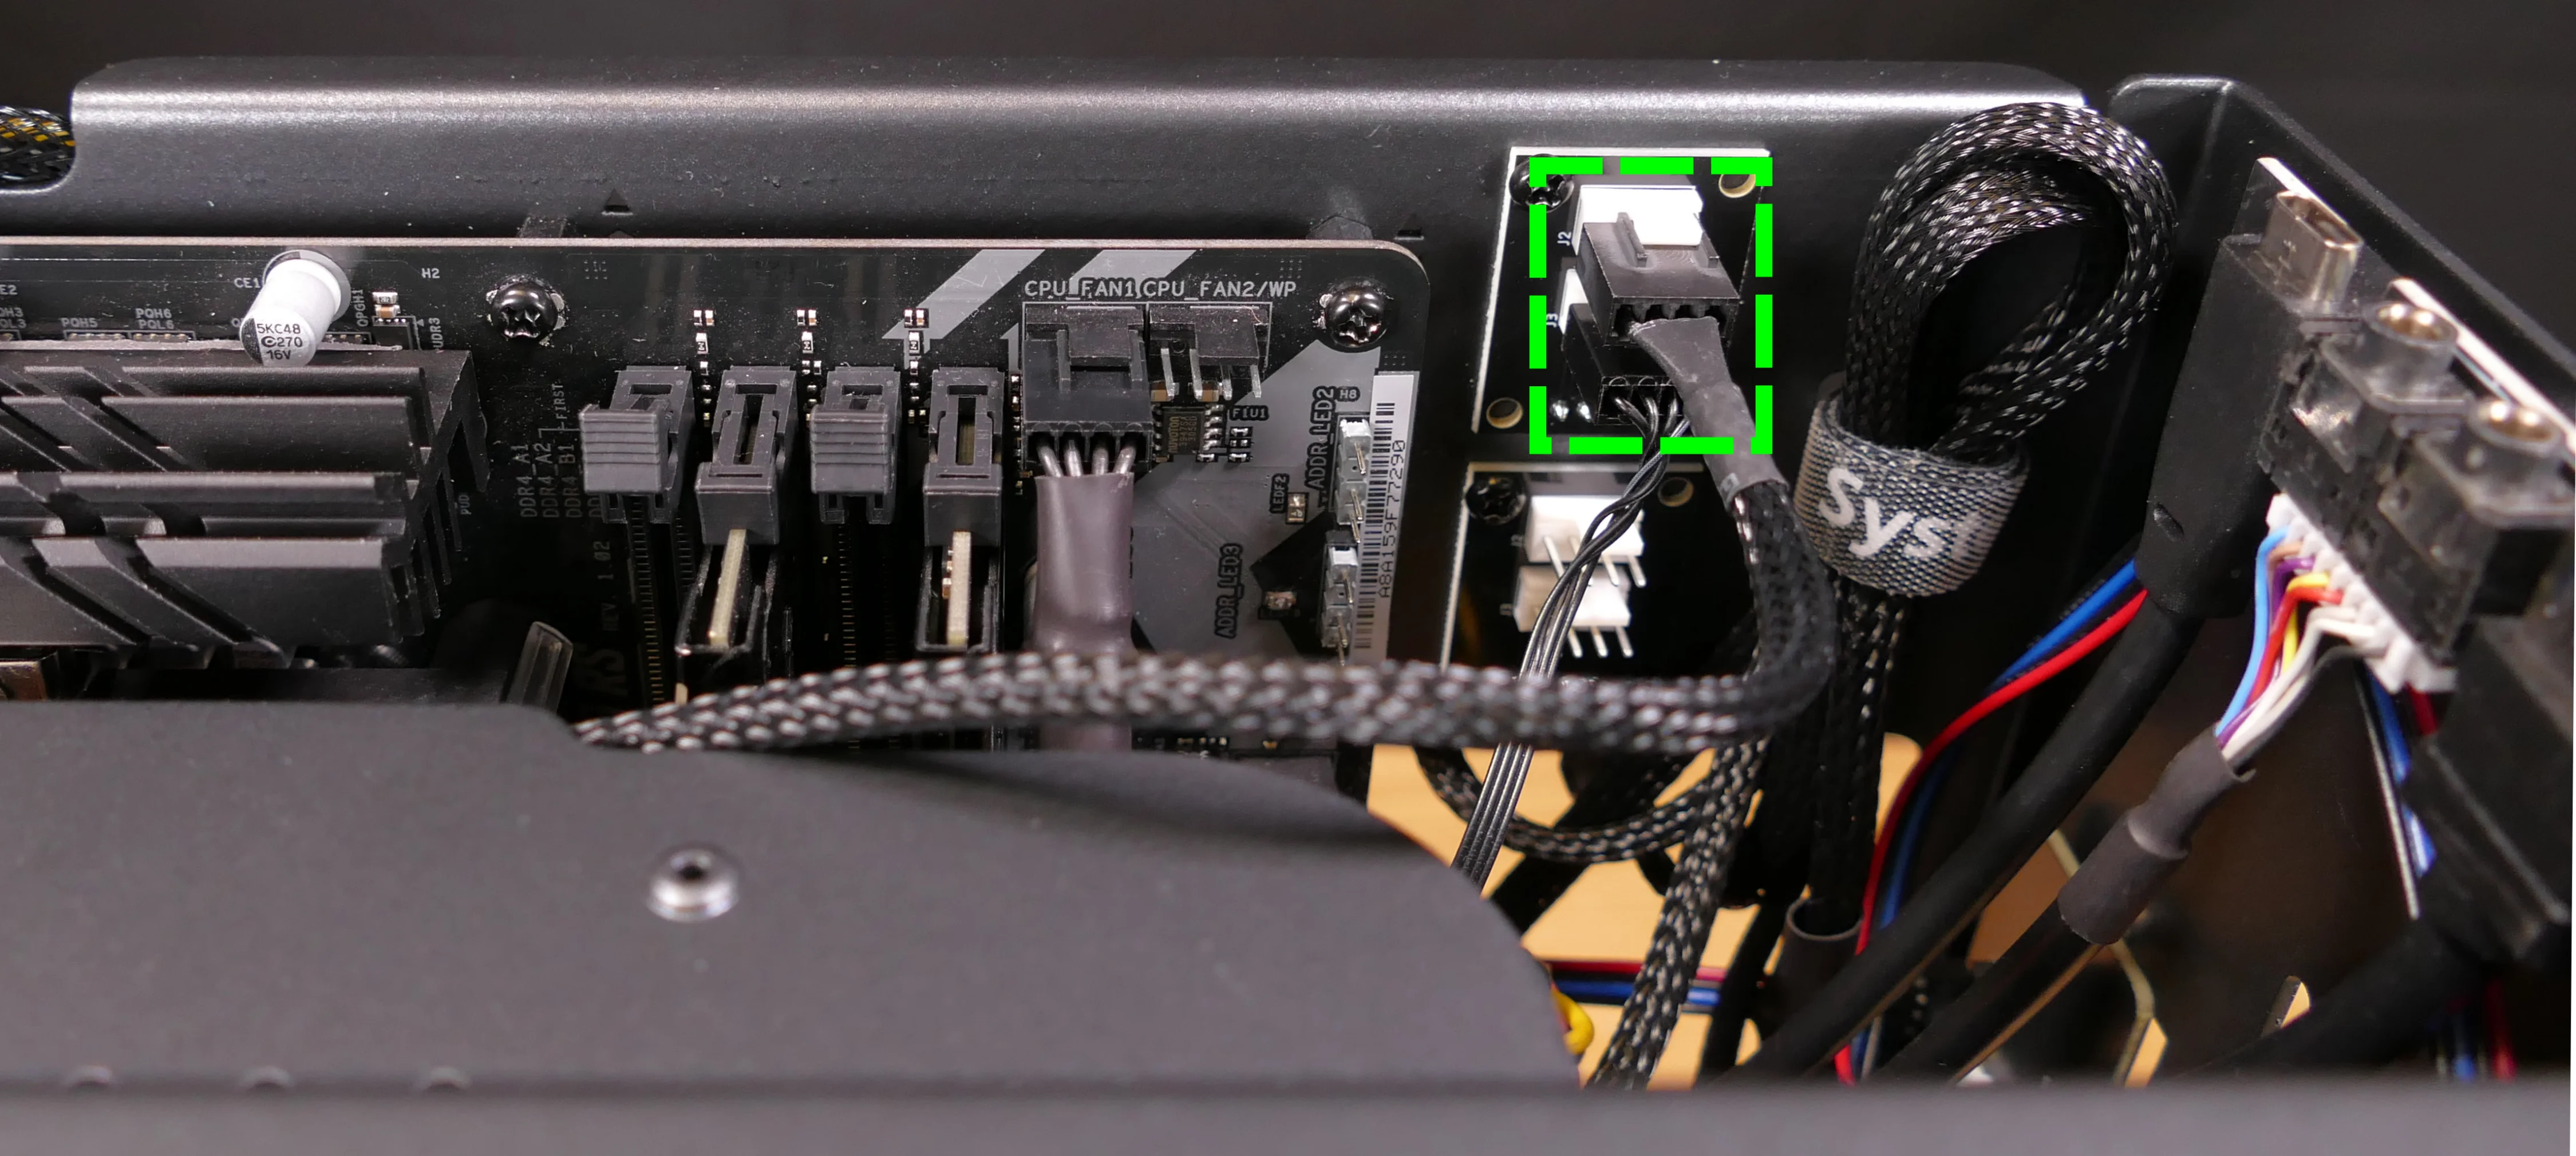 CPU fan connectors